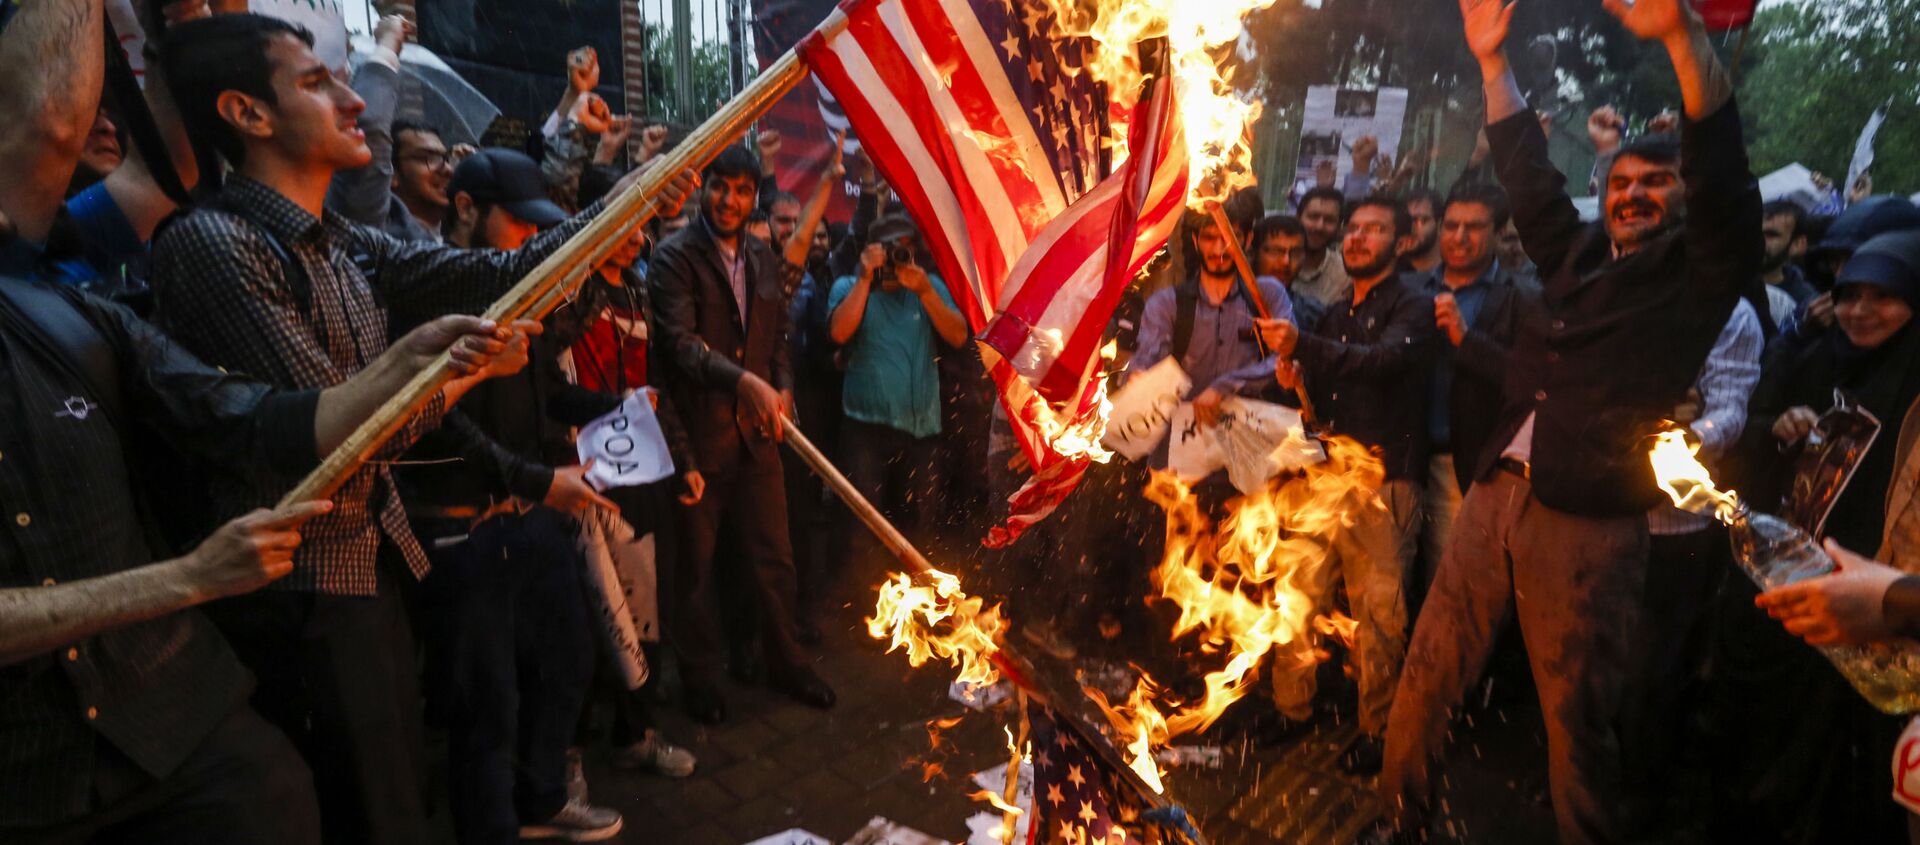 Сжигание американского флага во время протестов в Тегеране, Иран  - Sputnik Таджикистан, 1920, 01.02.2021